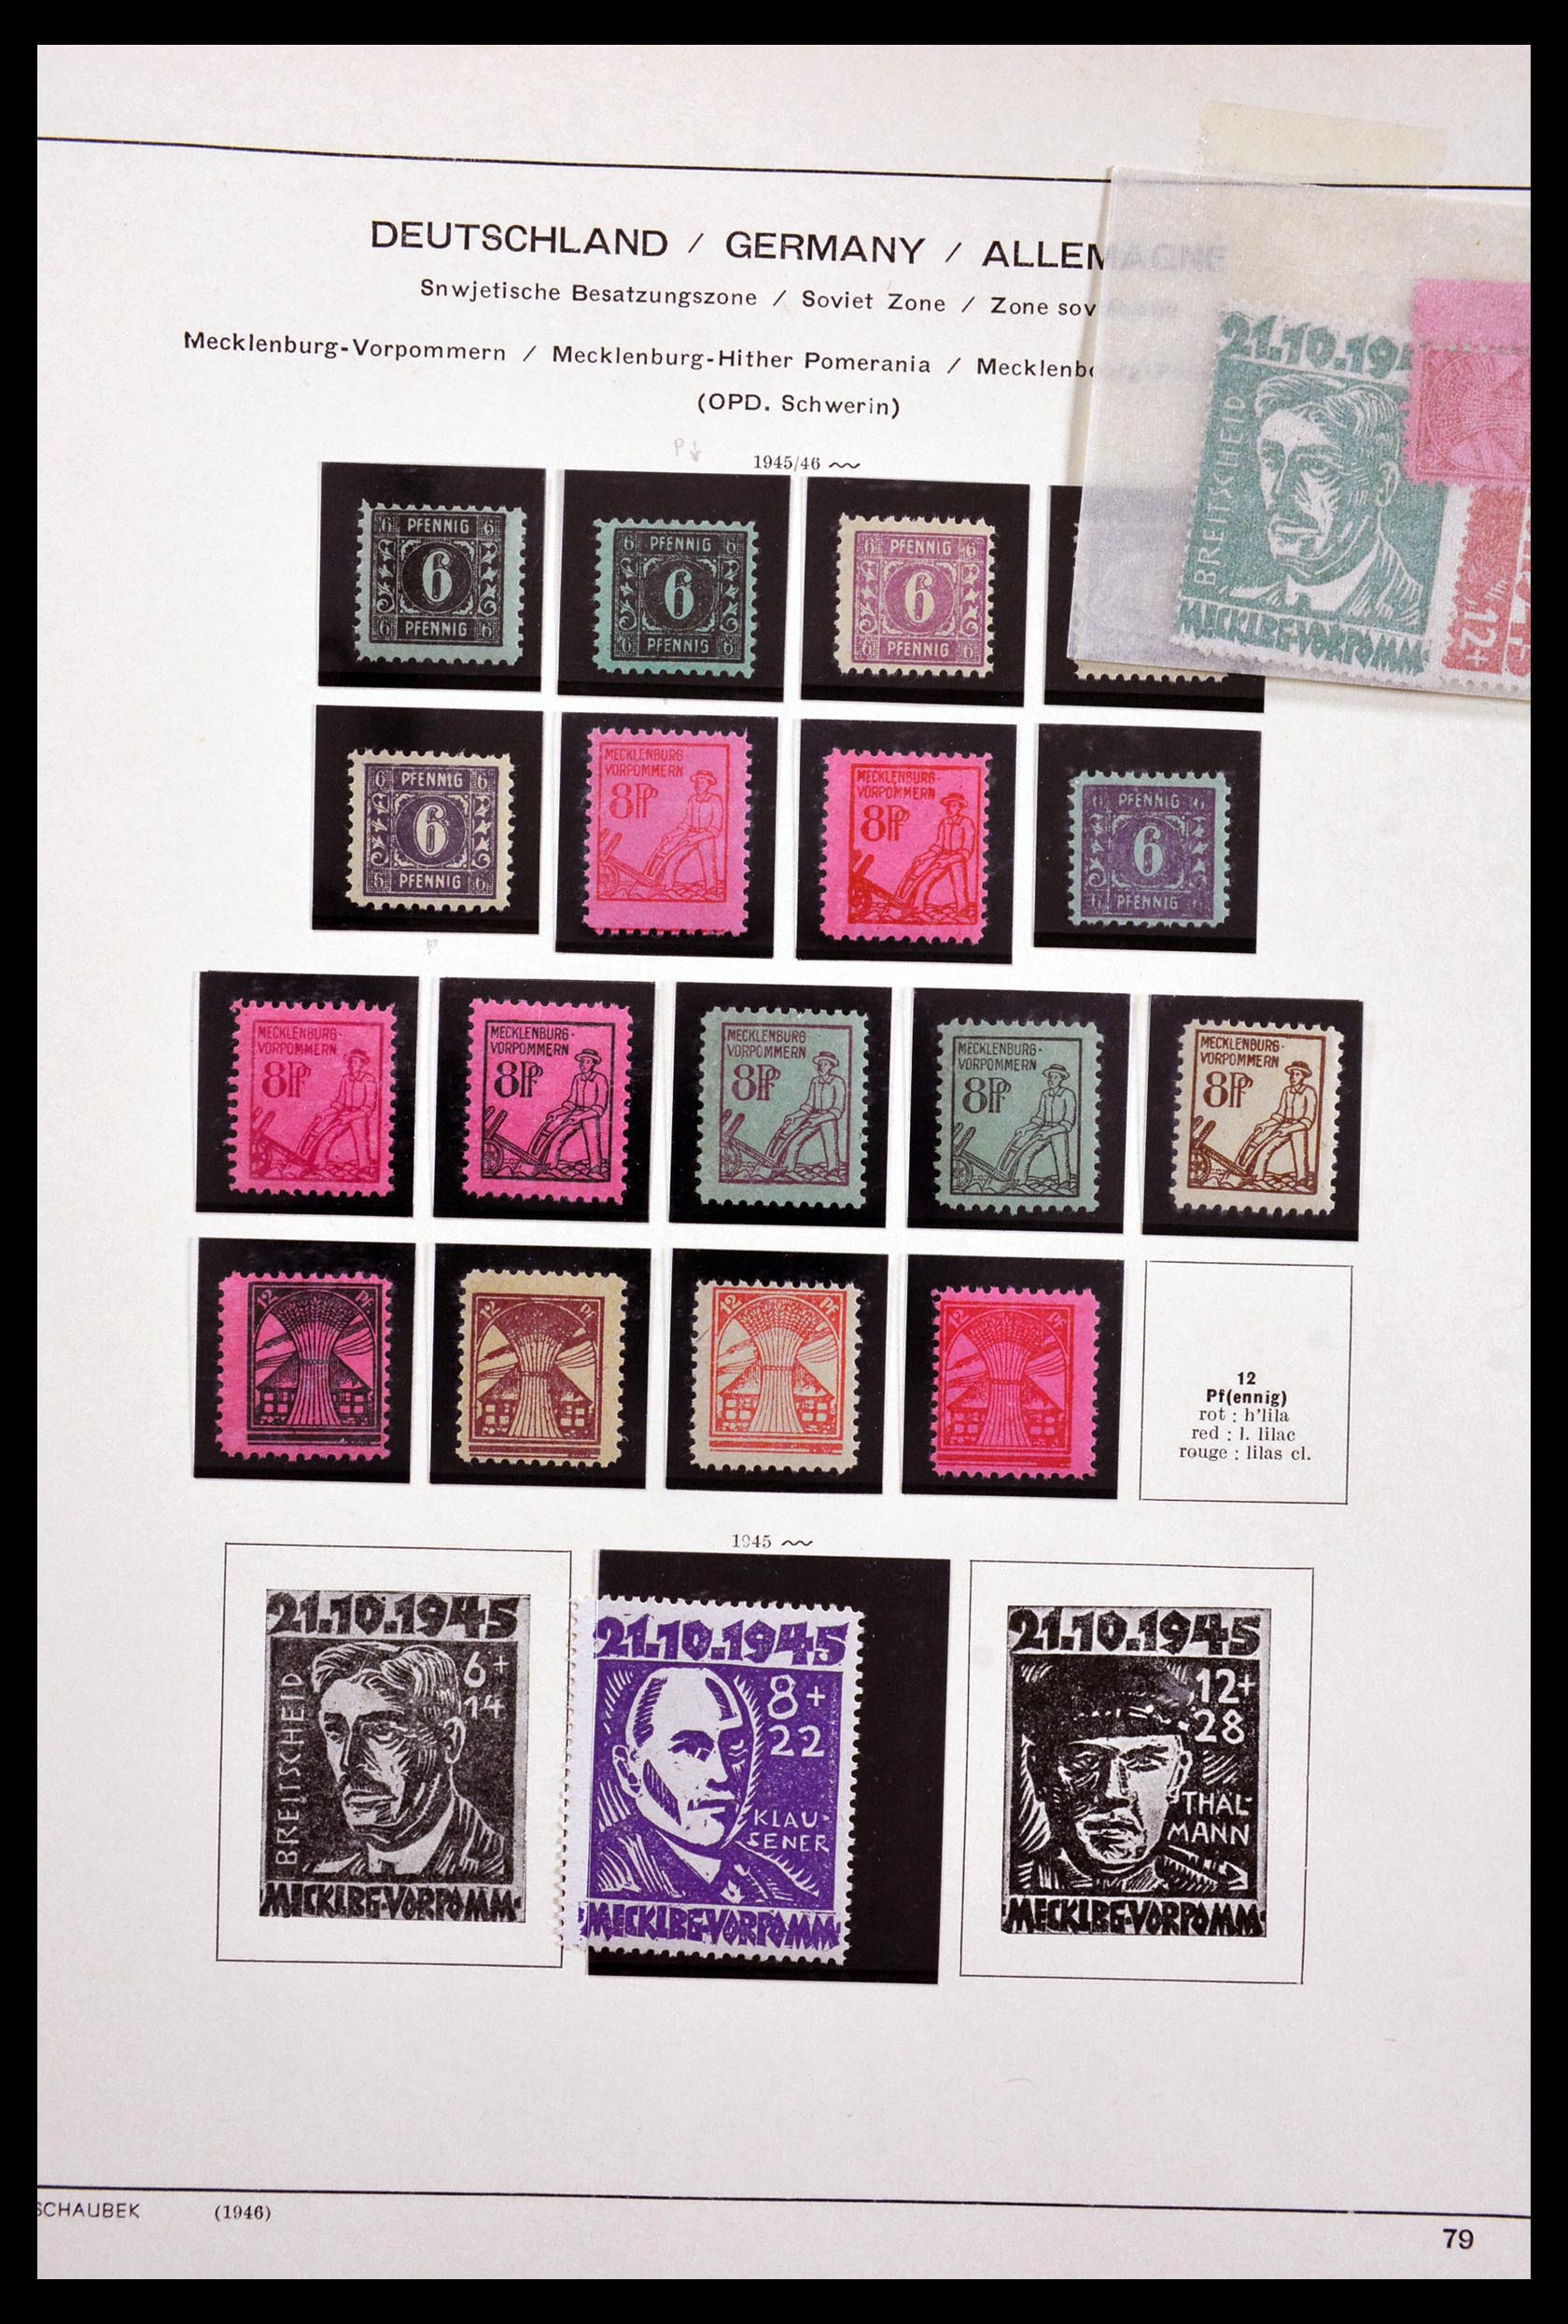 29731 024 - 29731 Local stamps Sovjetzone 1945-1949.